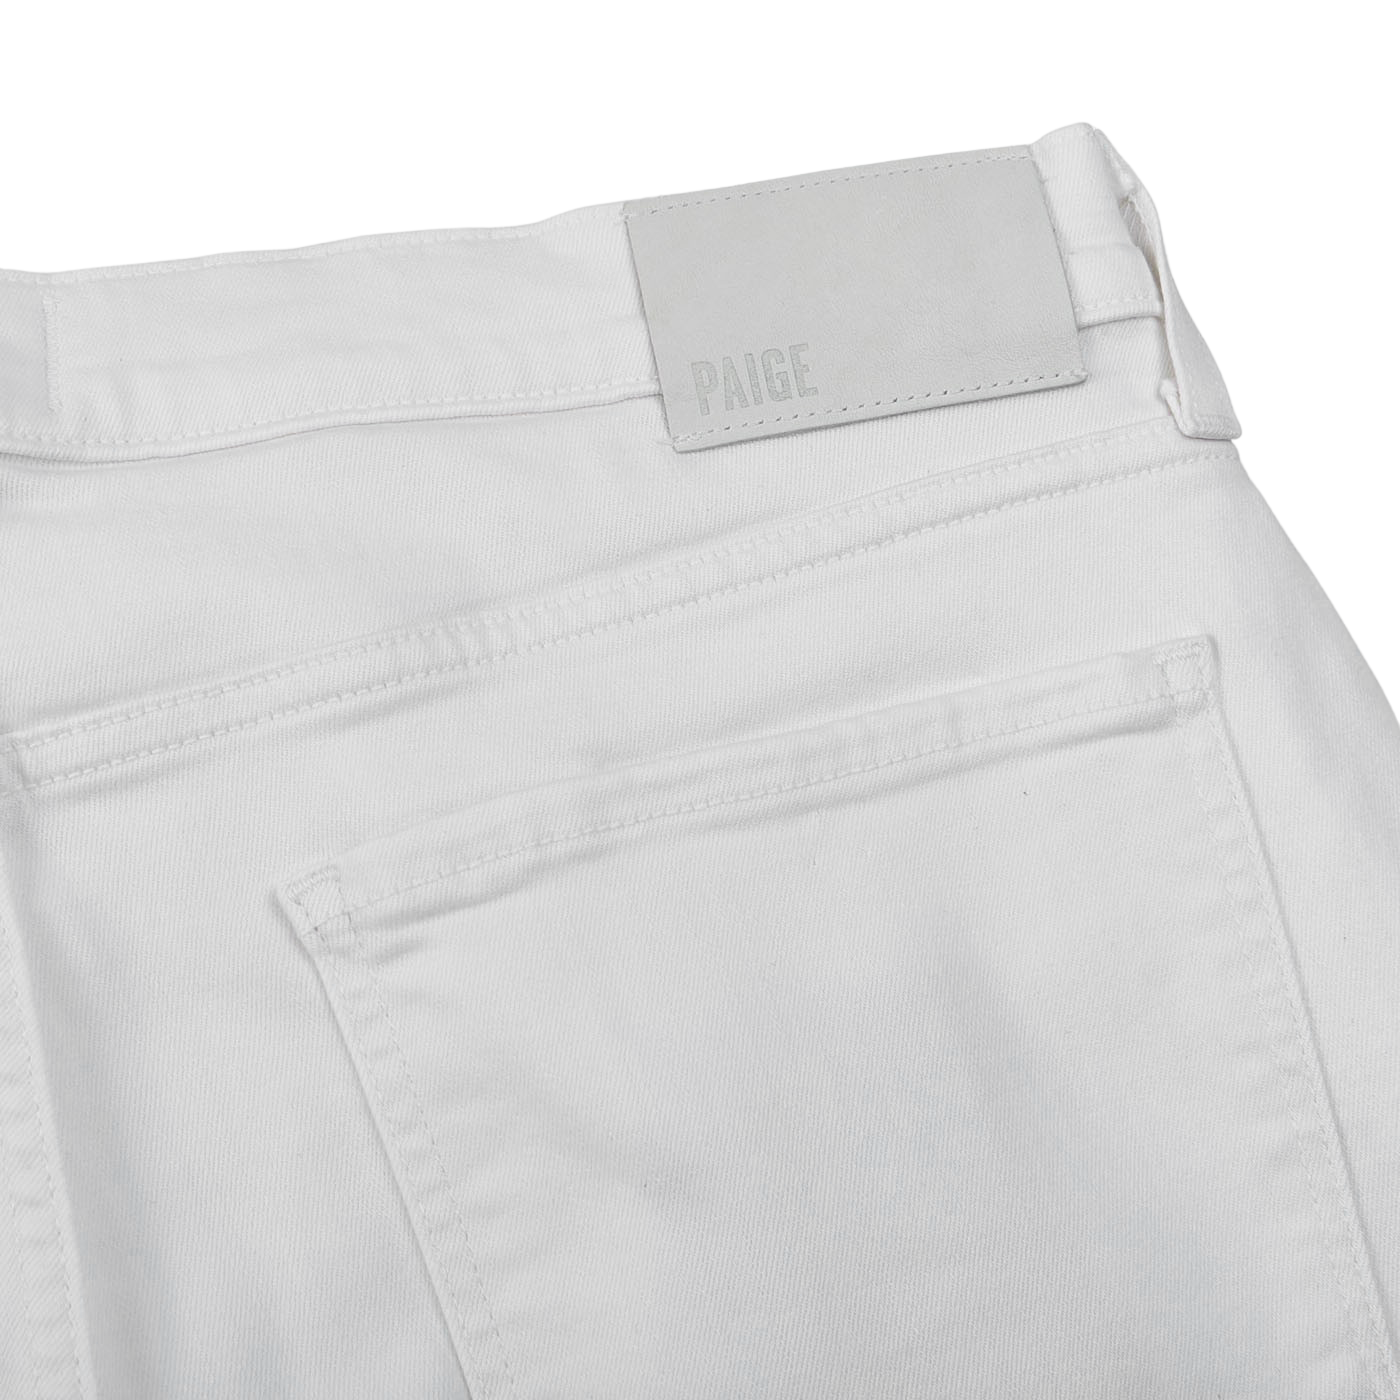 Paige White Icecap Cotton Stretch Lennox Jeans Pocket